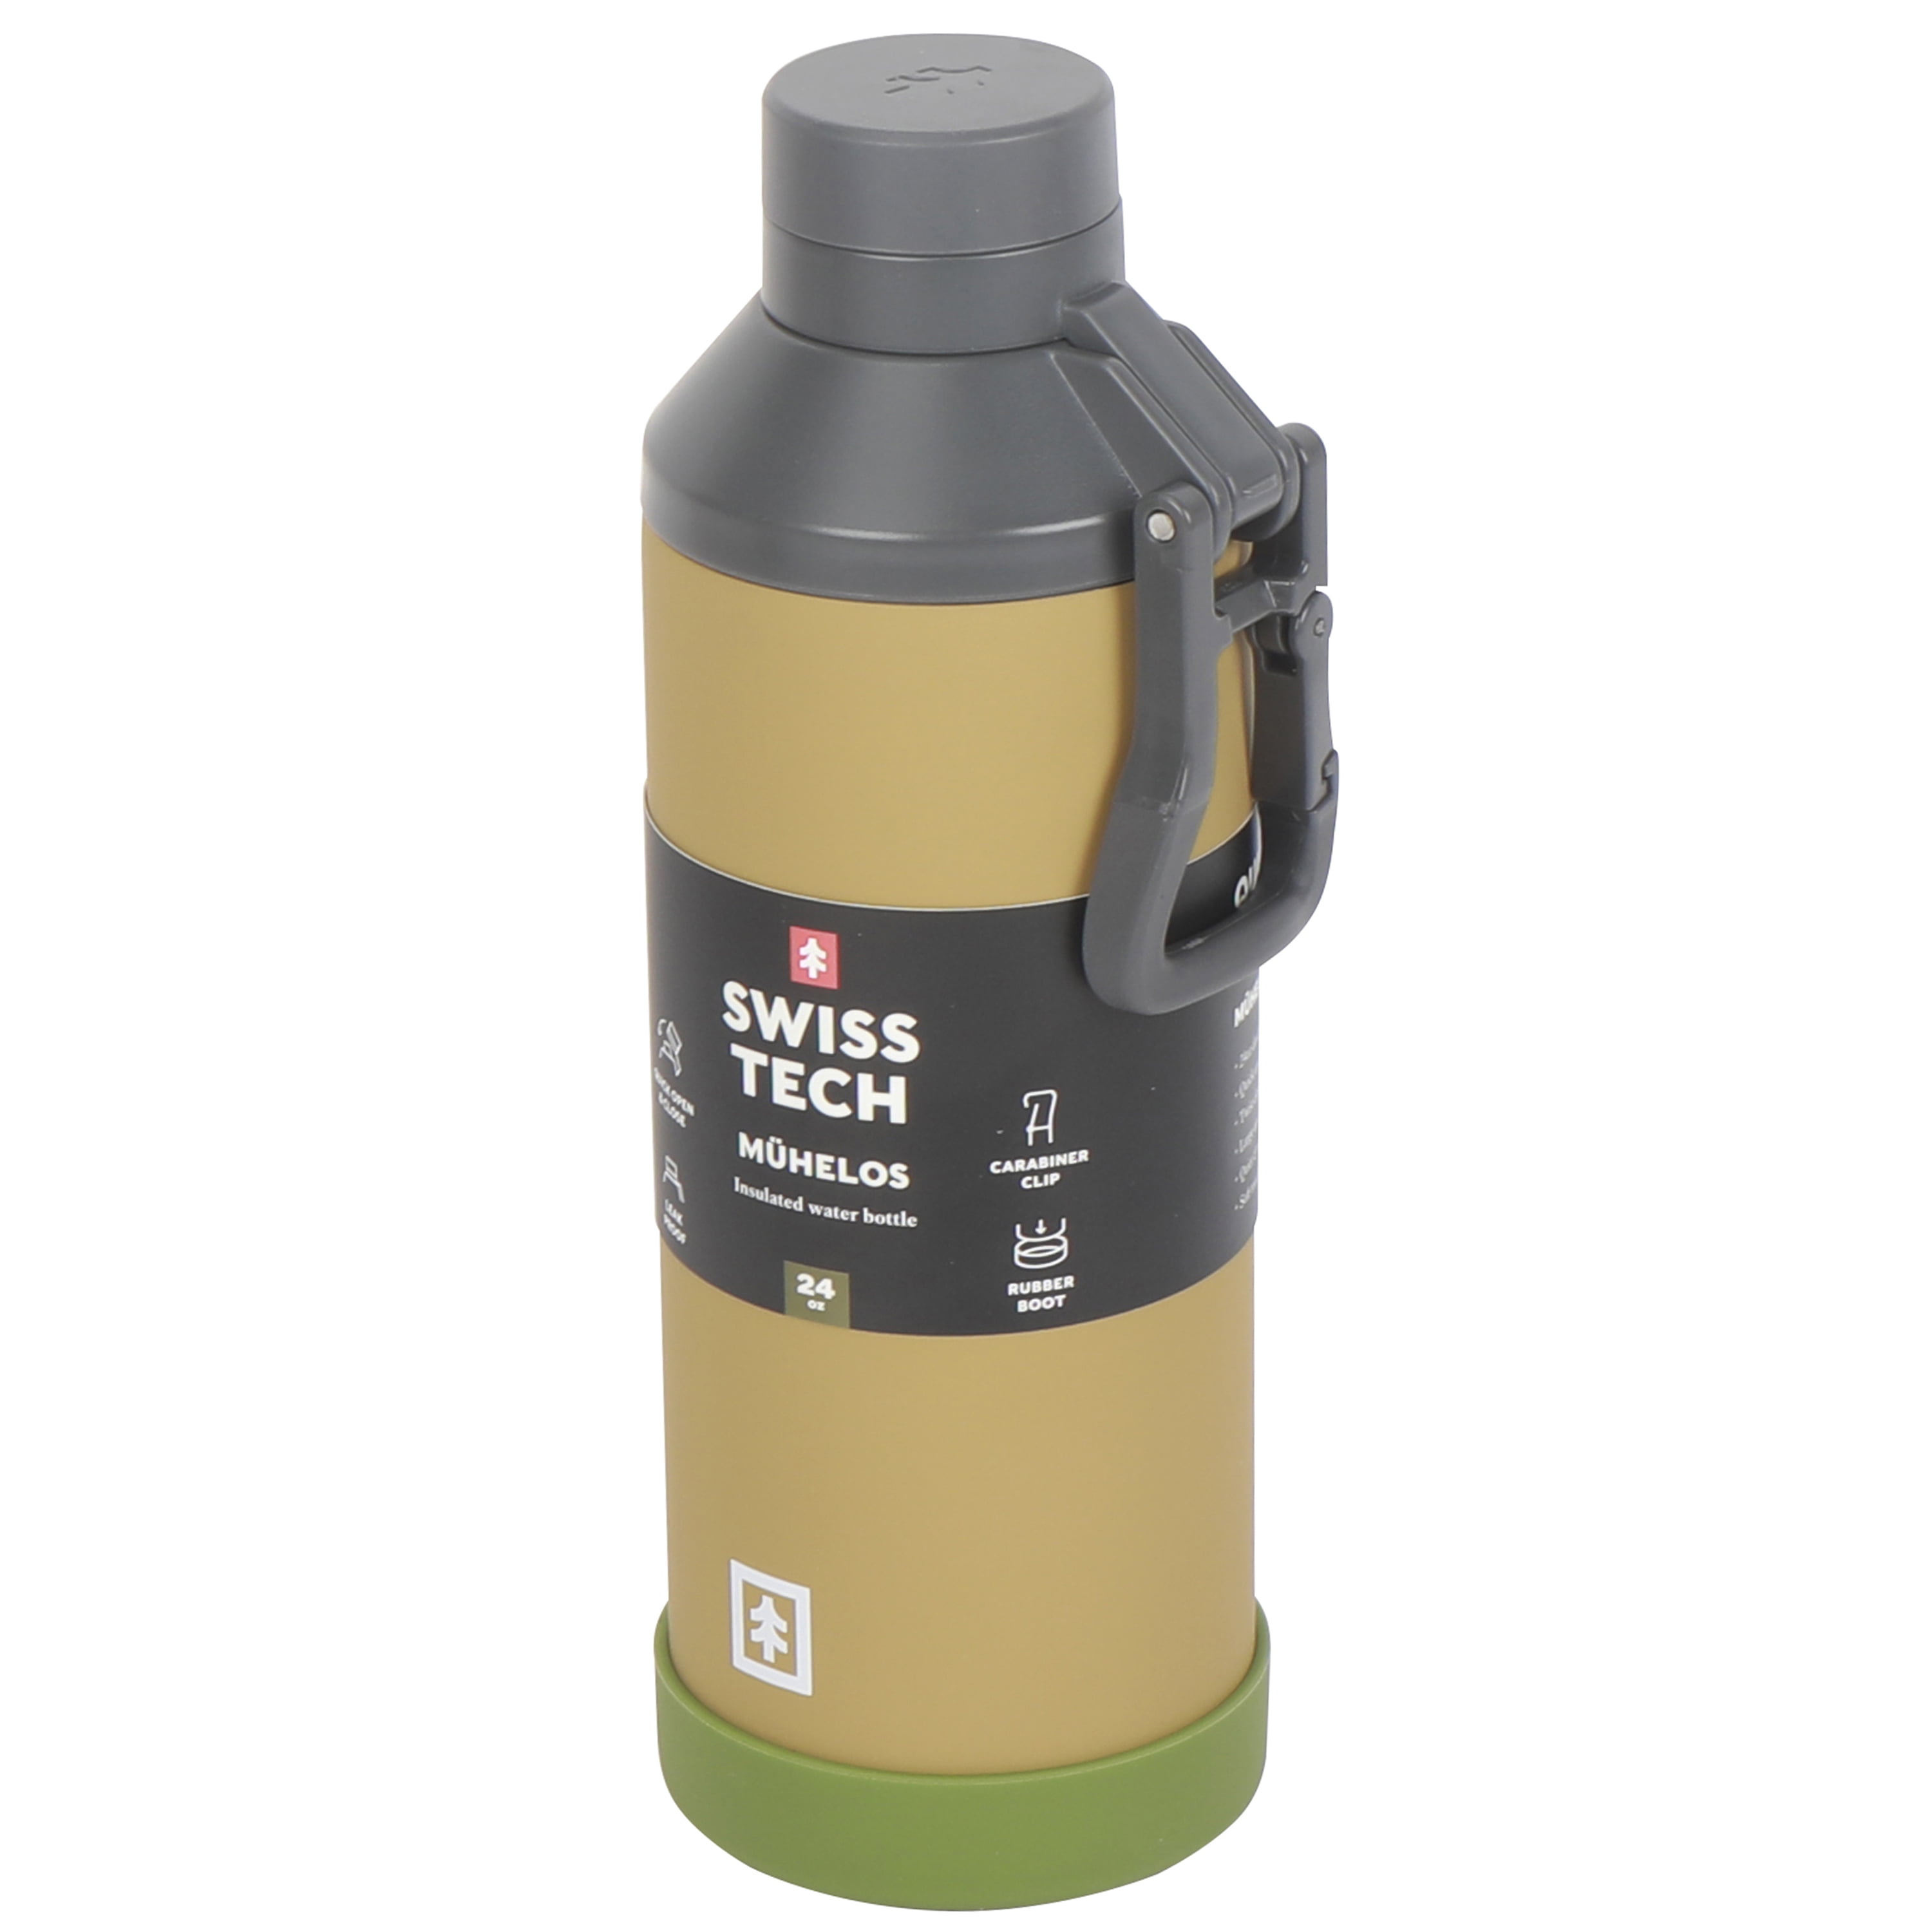 Brown Tan Color Water Bottle Flask